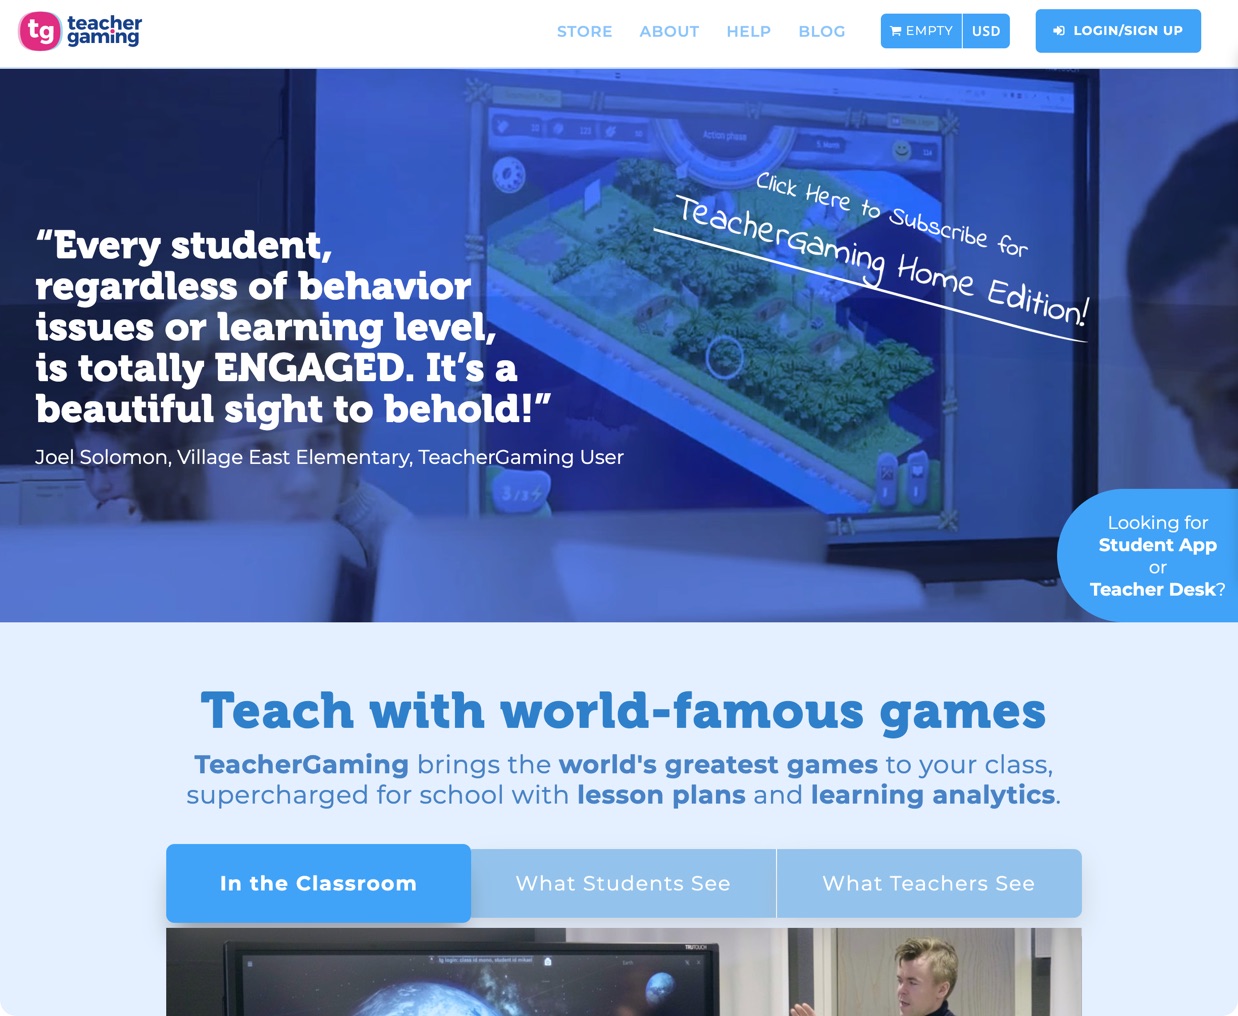 TeacherGaming Store Redesign Cover Image